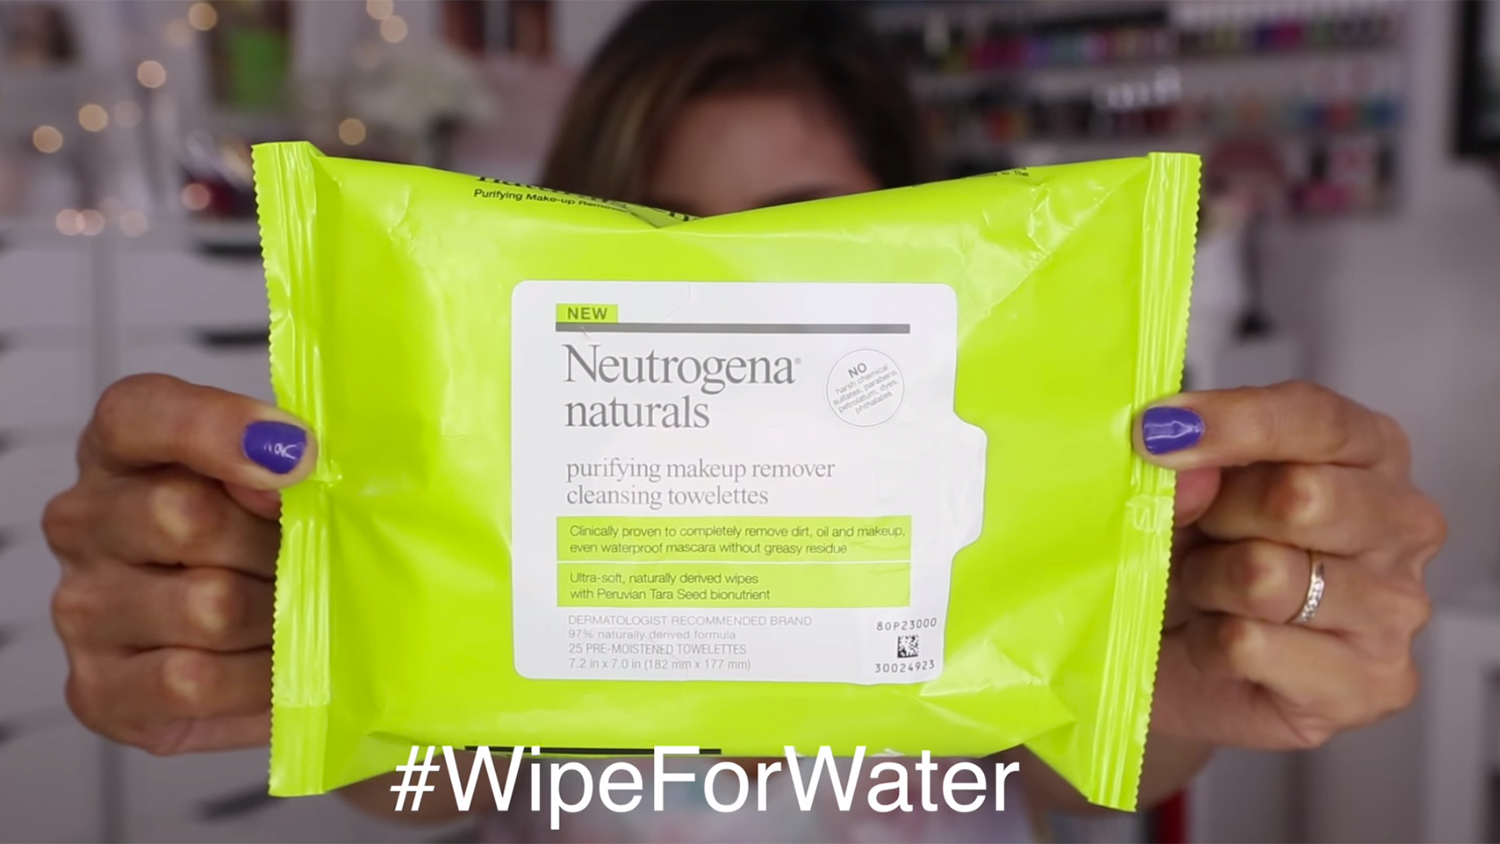 Neutrogena Naturals Wipe For Water